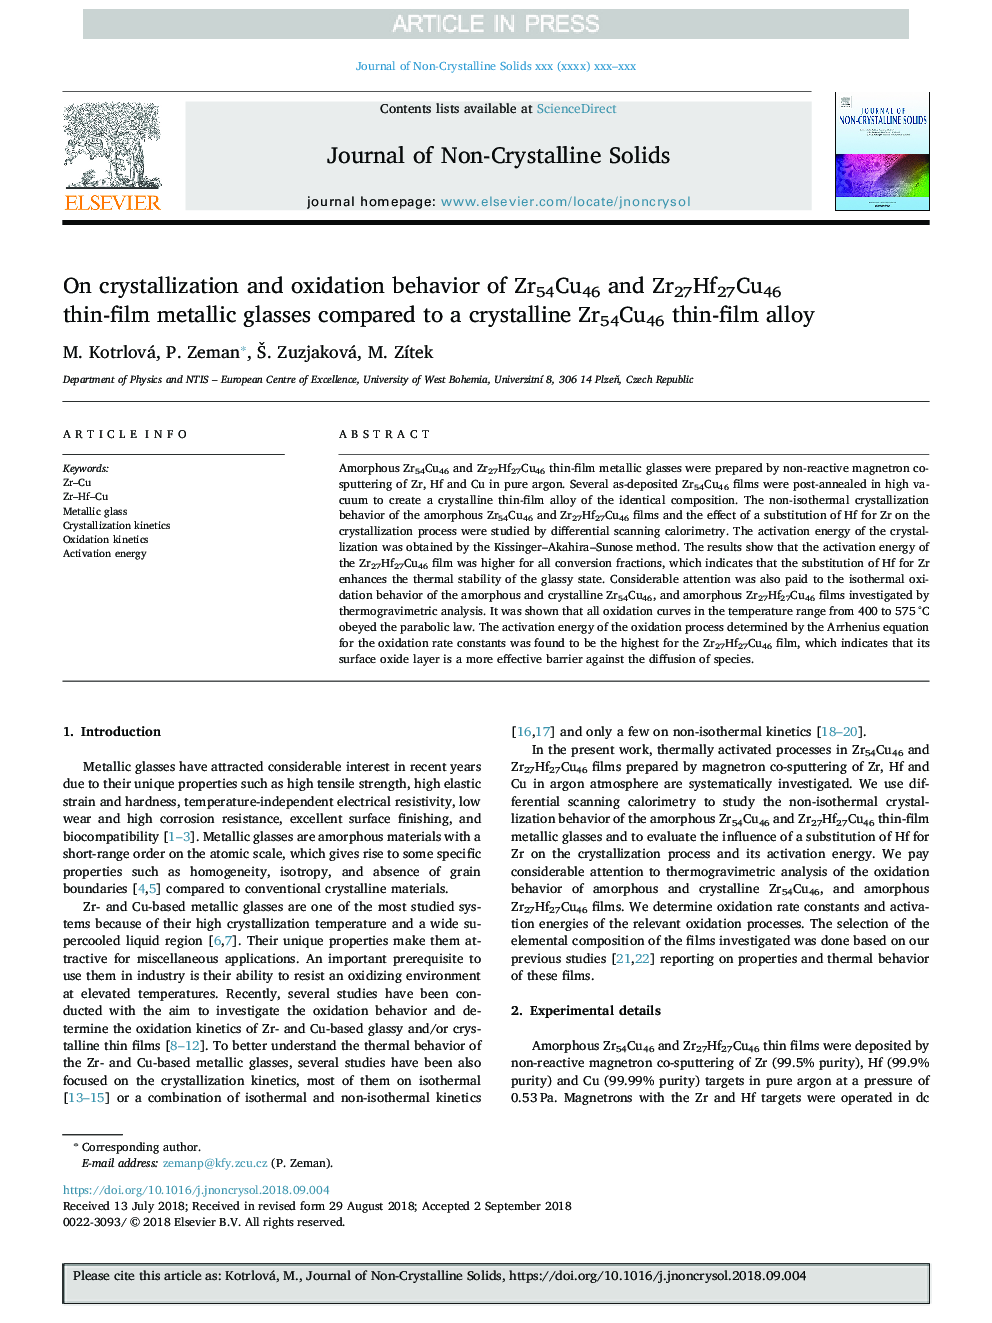 On crystallization and oxidation behavior of Zr54Cu46 and Zr27Hf27Cu46 thin-film metallic glasses compared to a crystalline Zr54Cu46 thin-film alloy